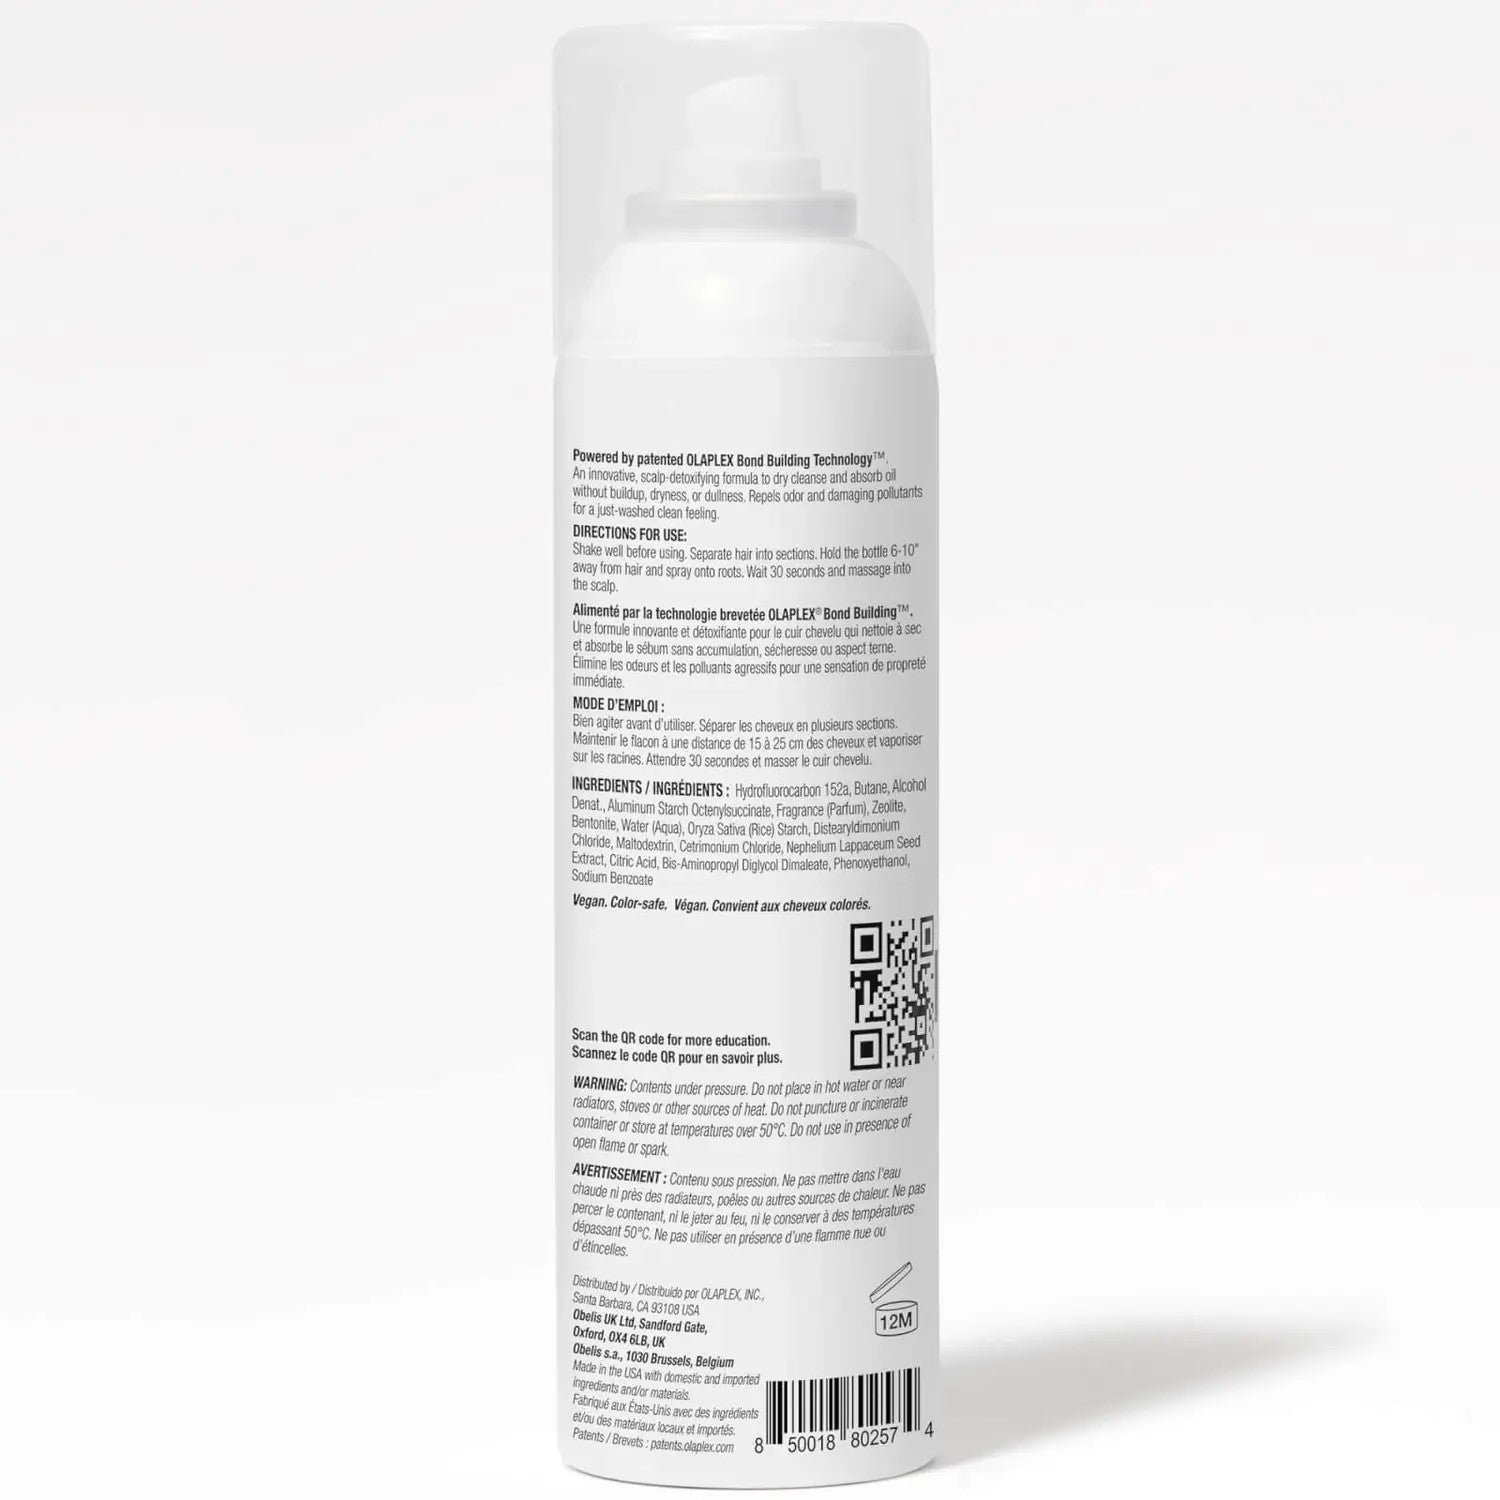 No 4D -- Clean Volume Detox Dry Shampoo ** 6.3 oz/178g